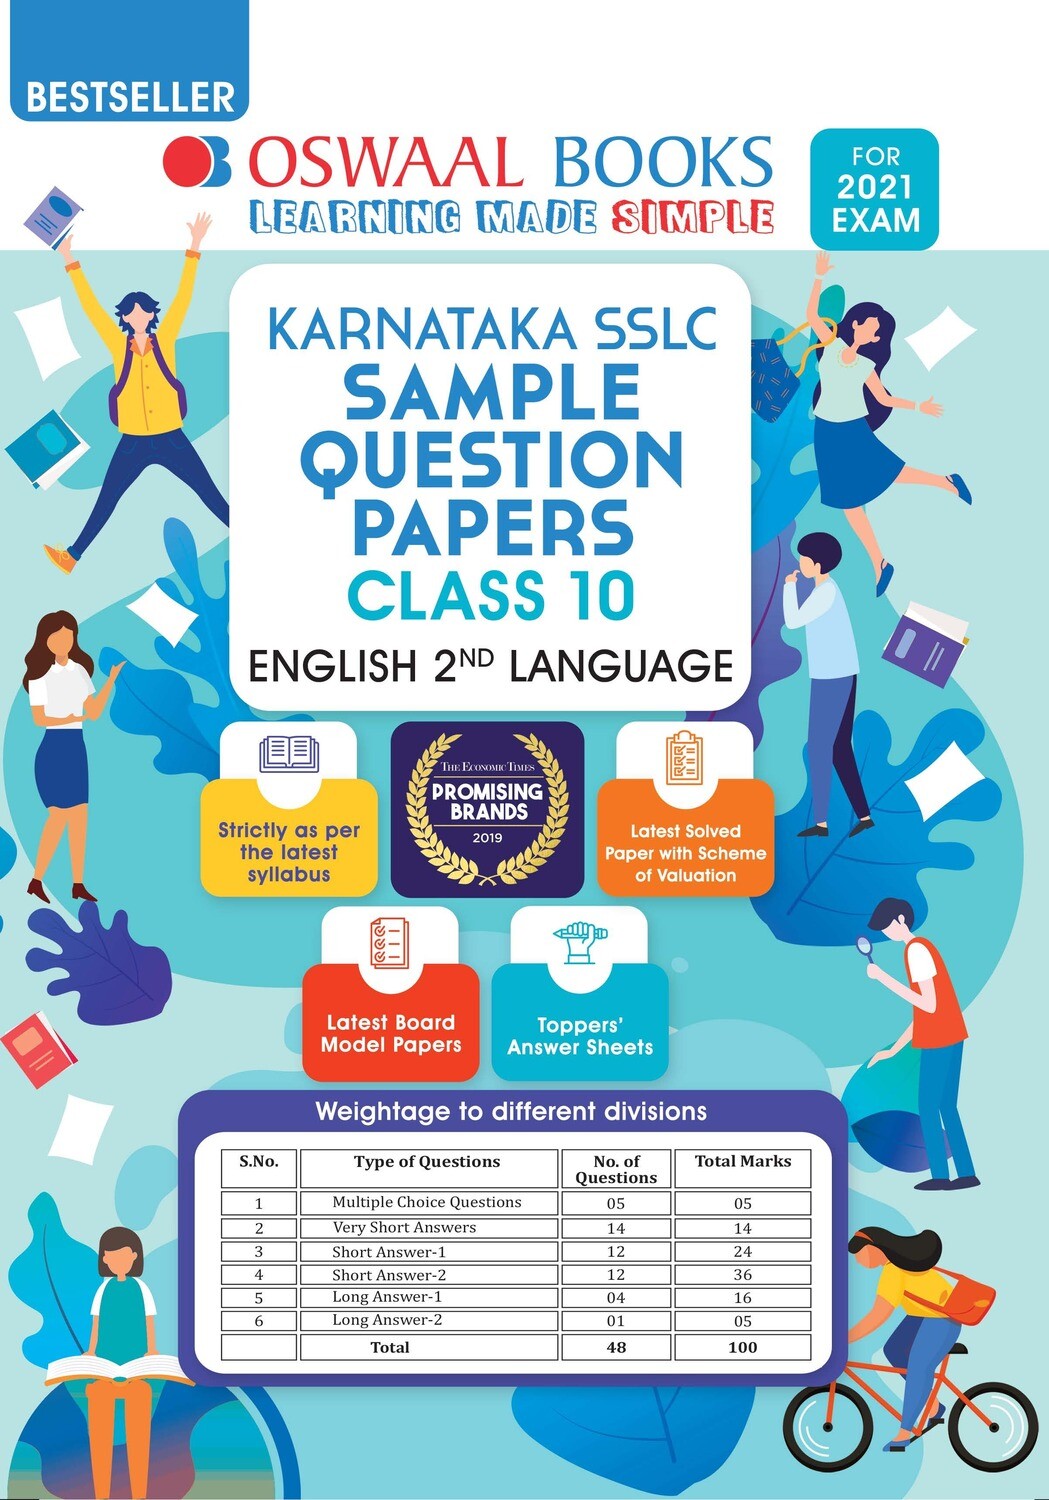 Buy e-book: Oswaal Karnataka SSLC Sample Question Papers Class 10 English IInd Language Book (For 2021 Exam)